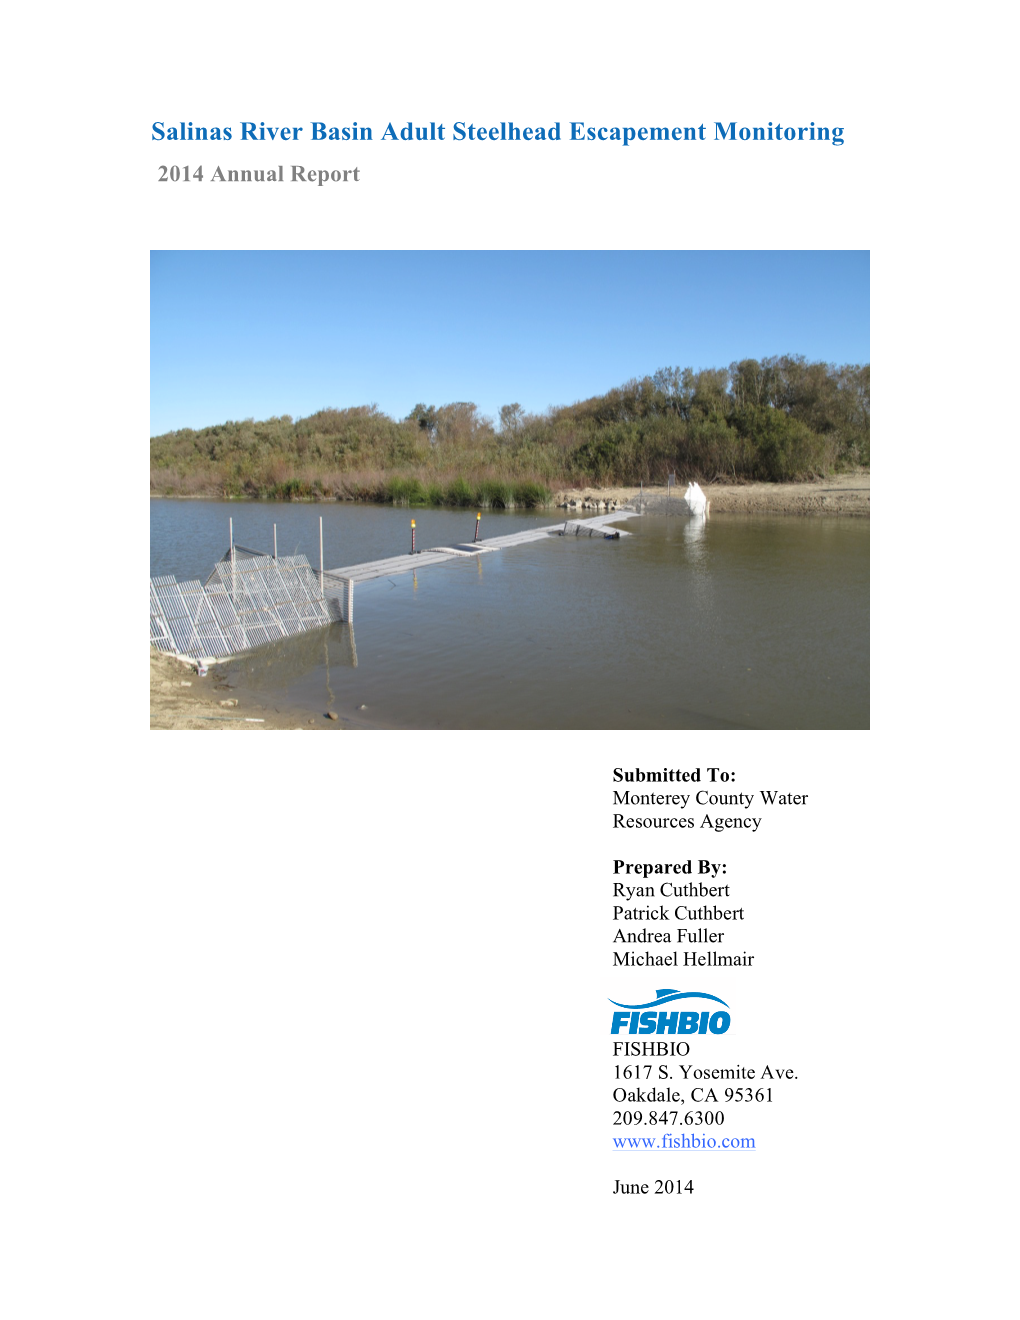 Salinas River Basin Adult Steelhead Escapement Monitoring 2014 Annual Report